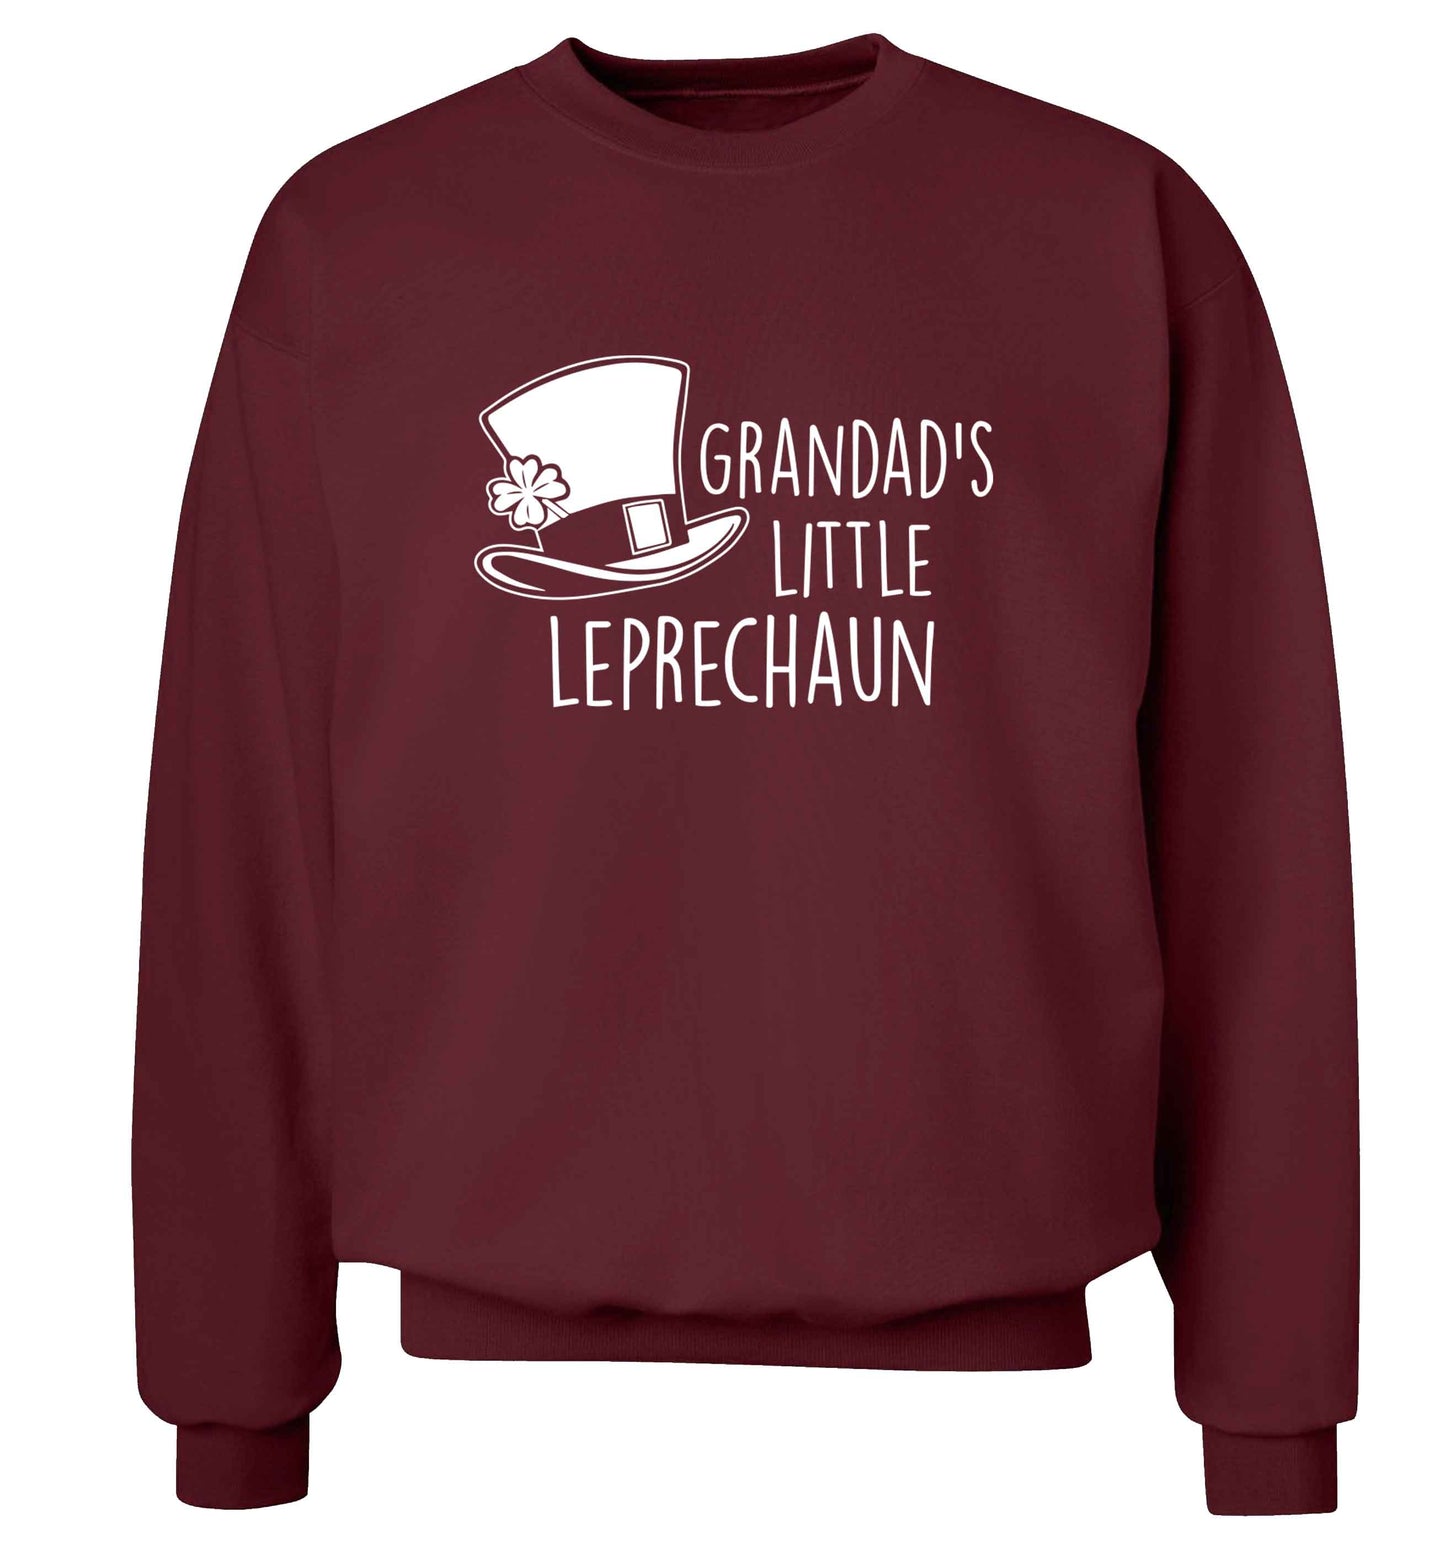 Grandad's little leprechaun adult's unisex maroon sweater 2XL